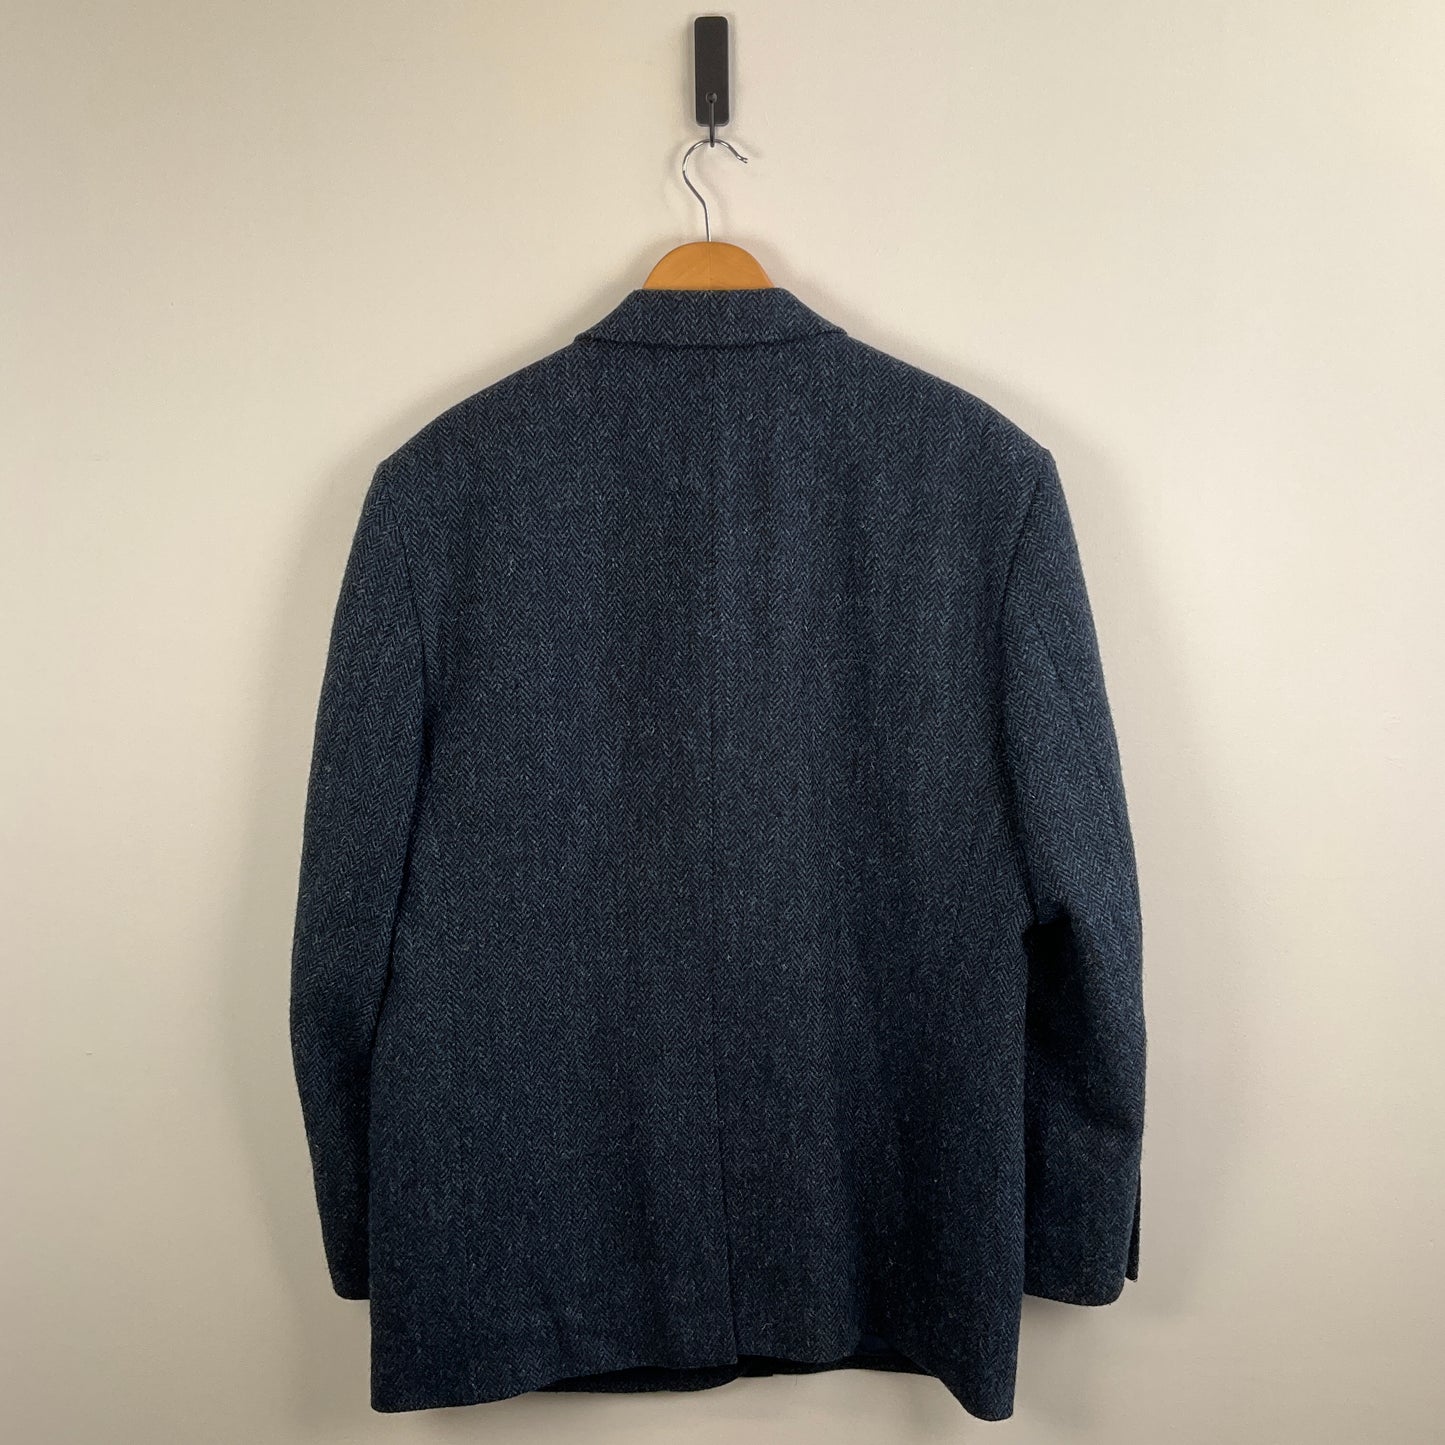 Orsini - Men's Wool Jacket